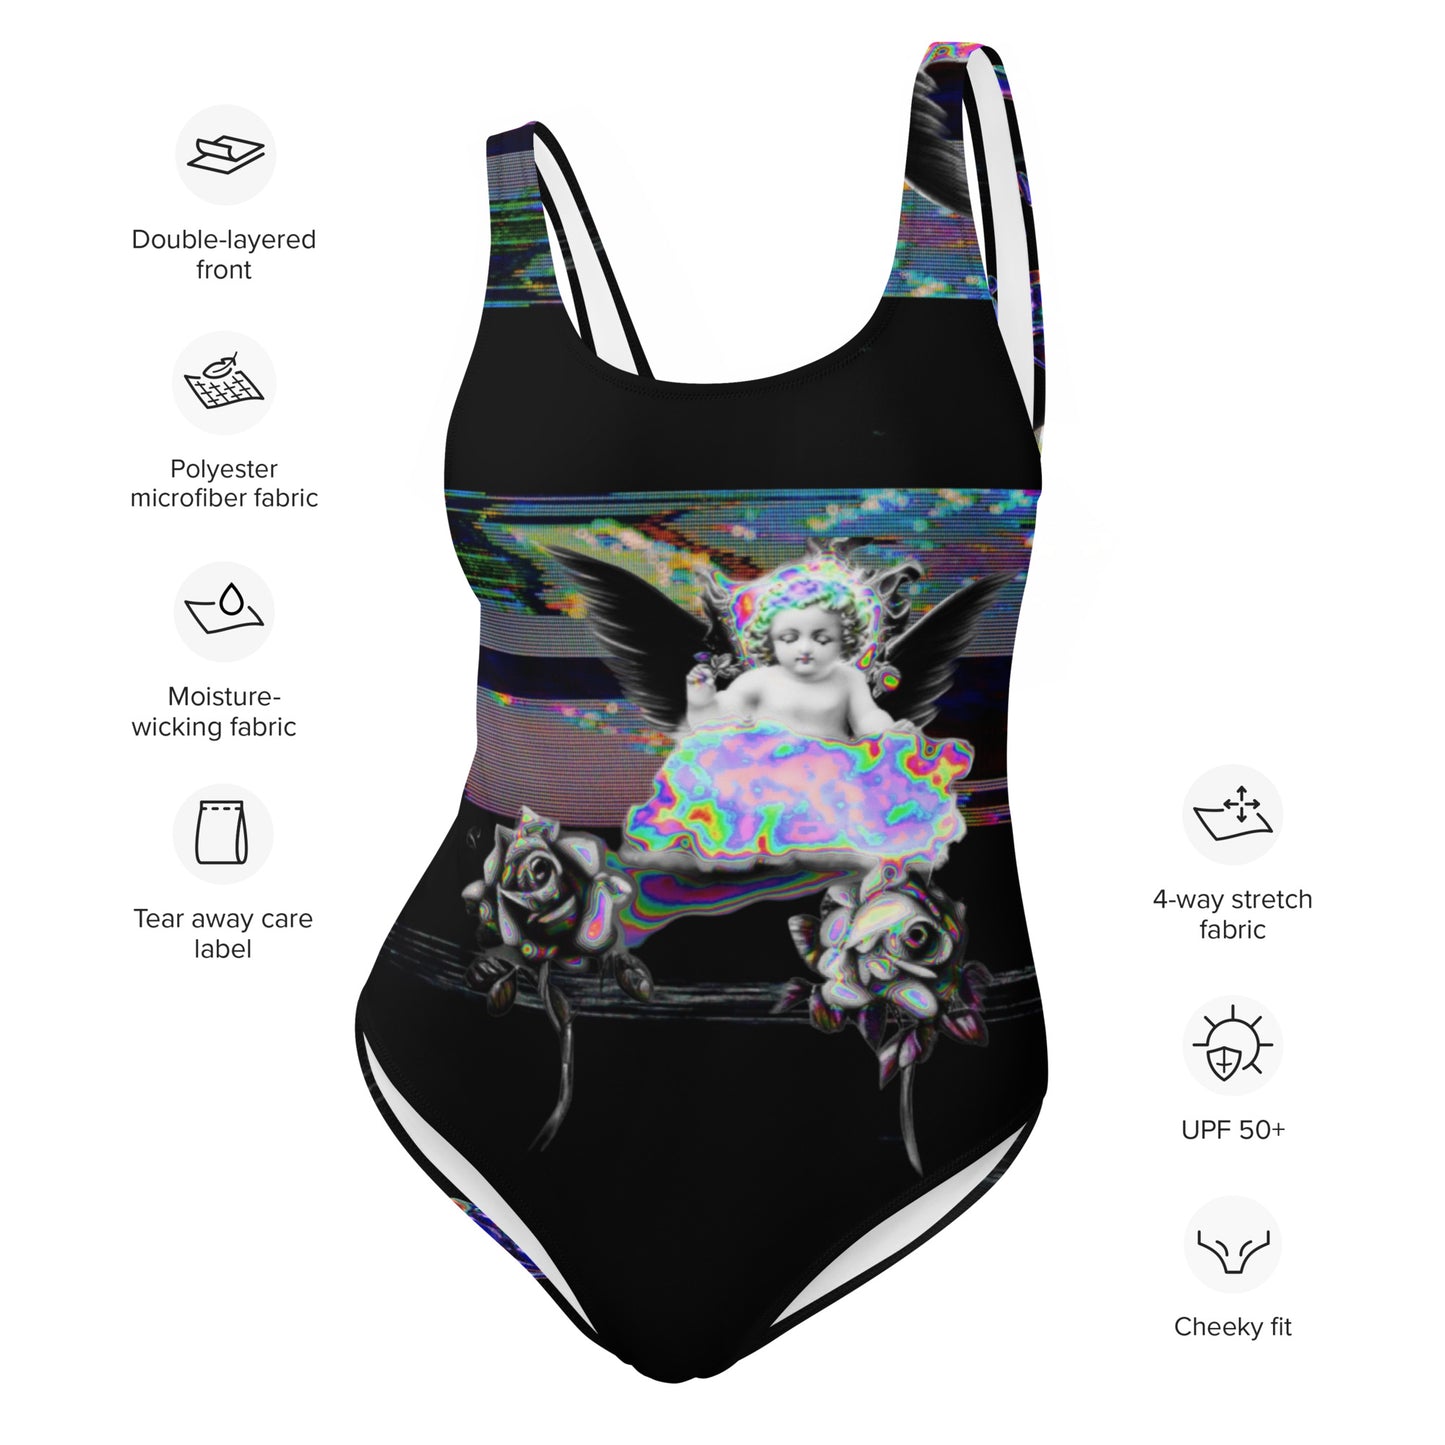 Wicked Games : Neon Eros One-Piece Swimsuit